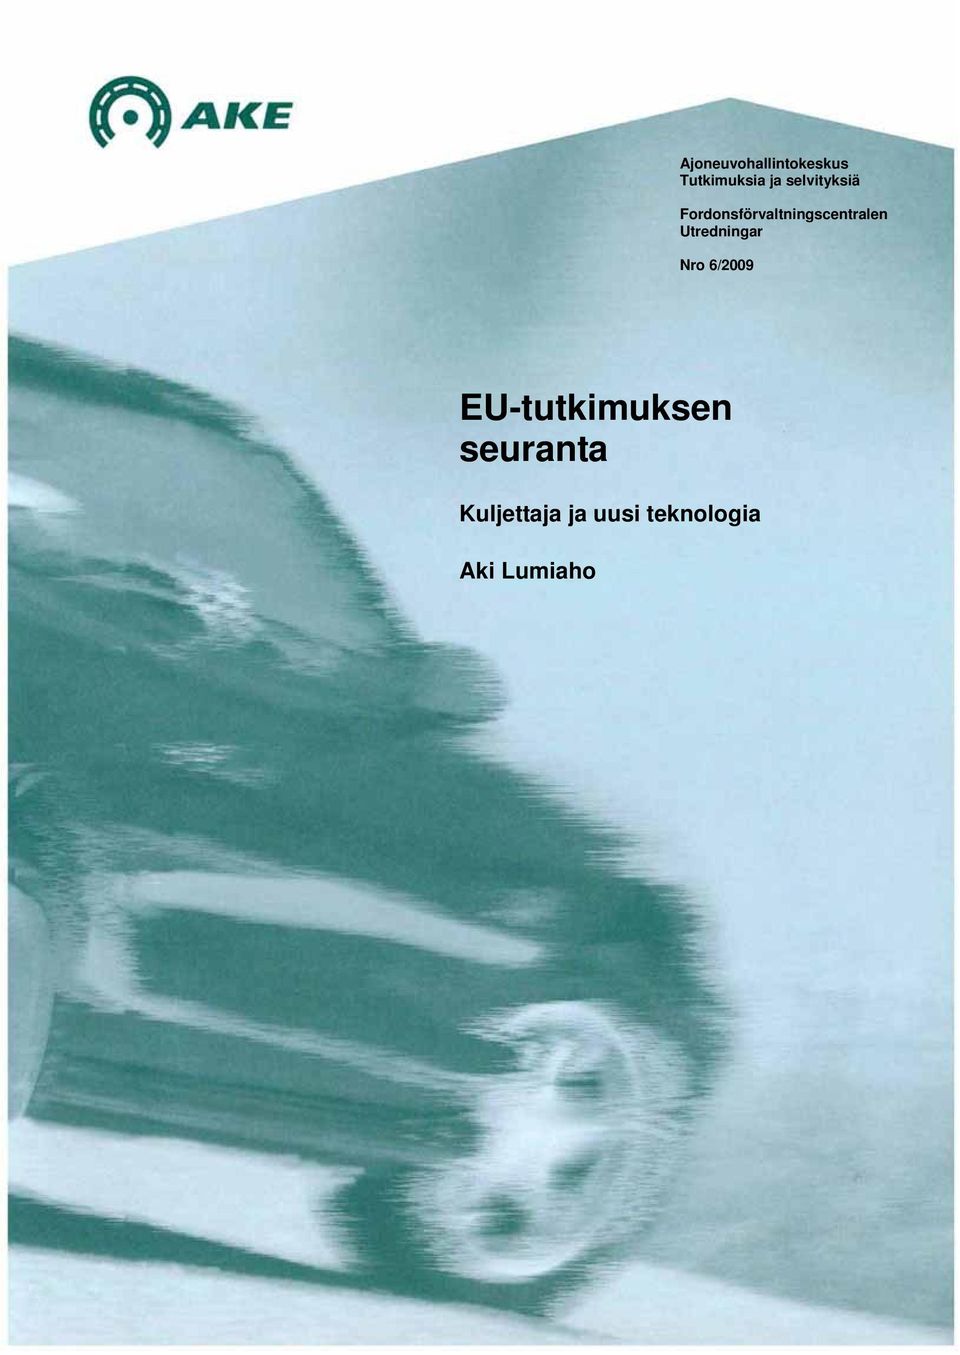 Utredningar Nro 6/2009 EU-tutkimuksen